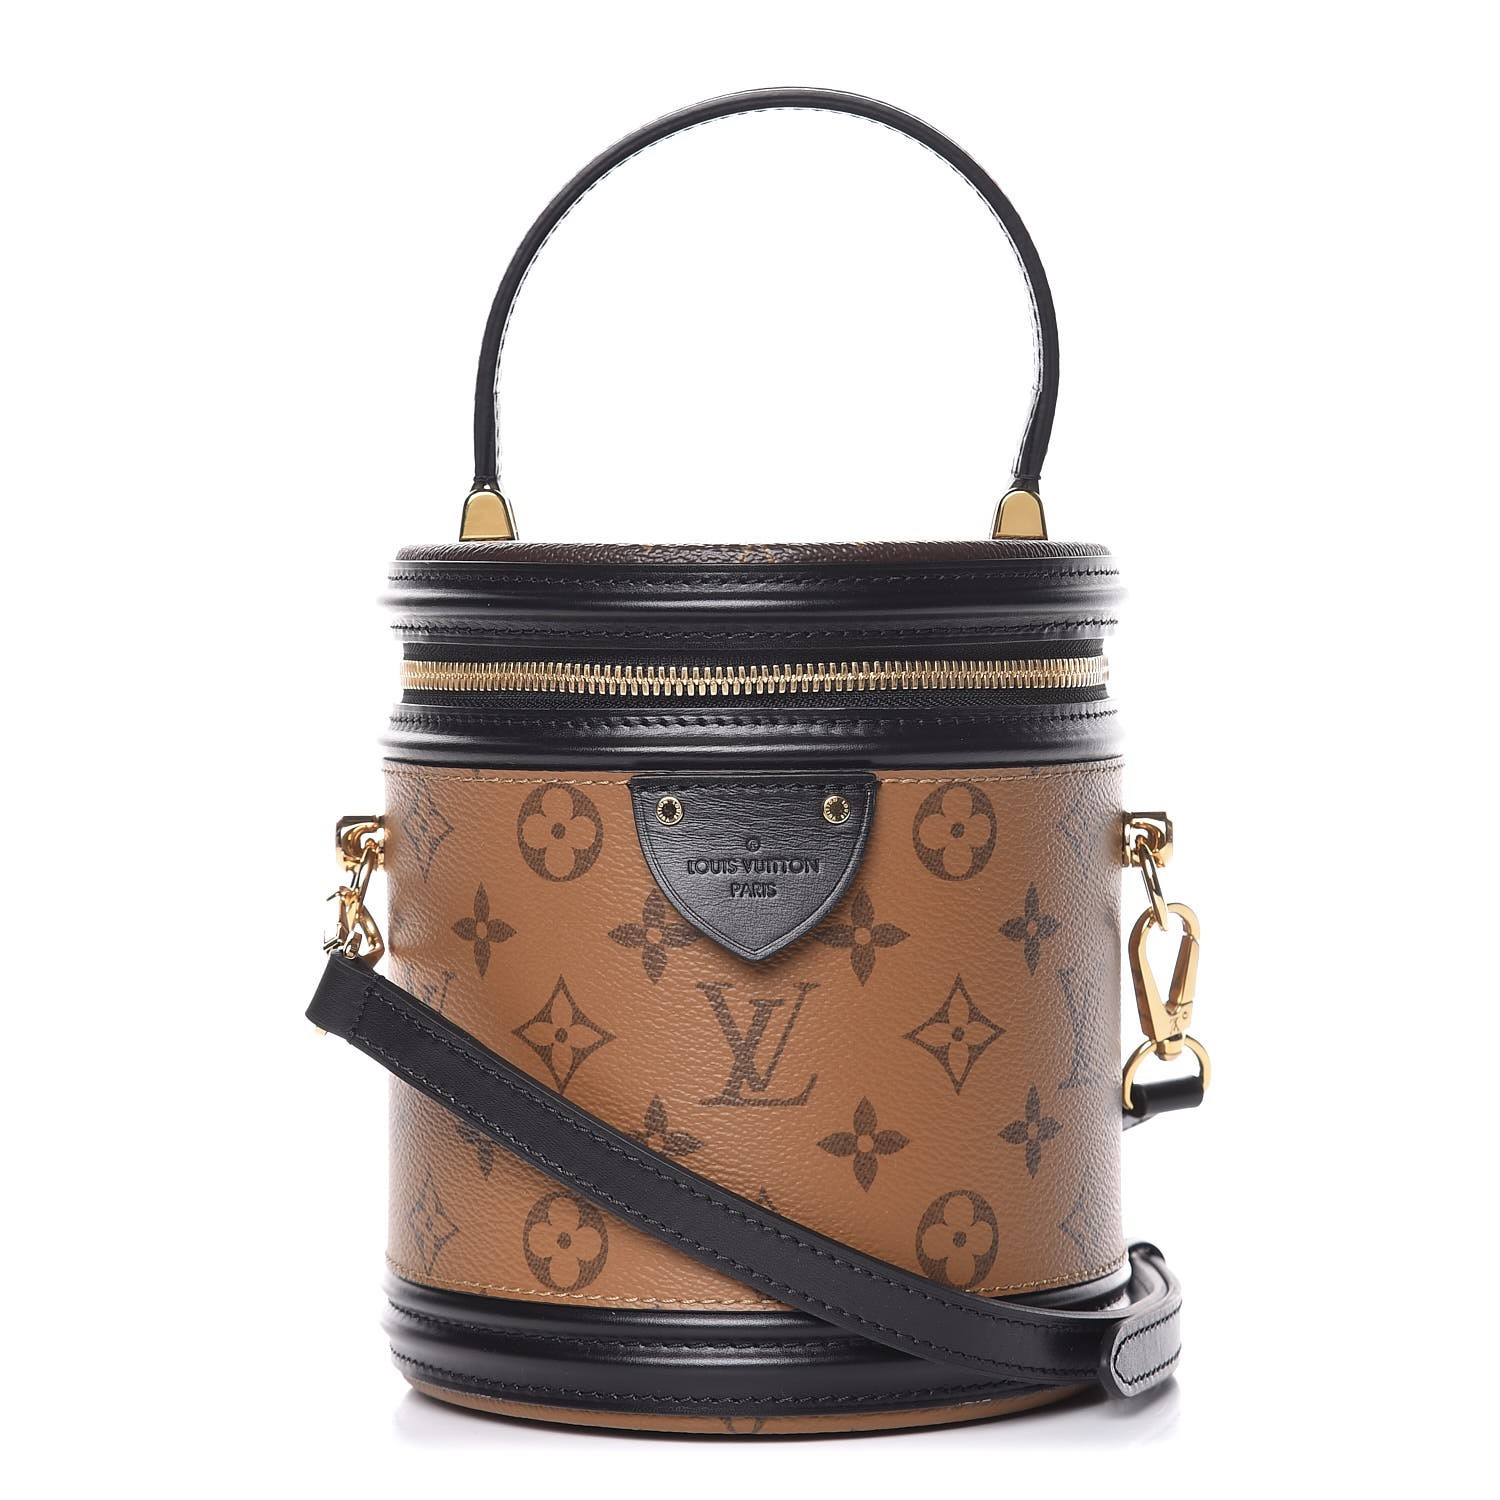 Louis Vuitton Mabillon handbag unboxing 